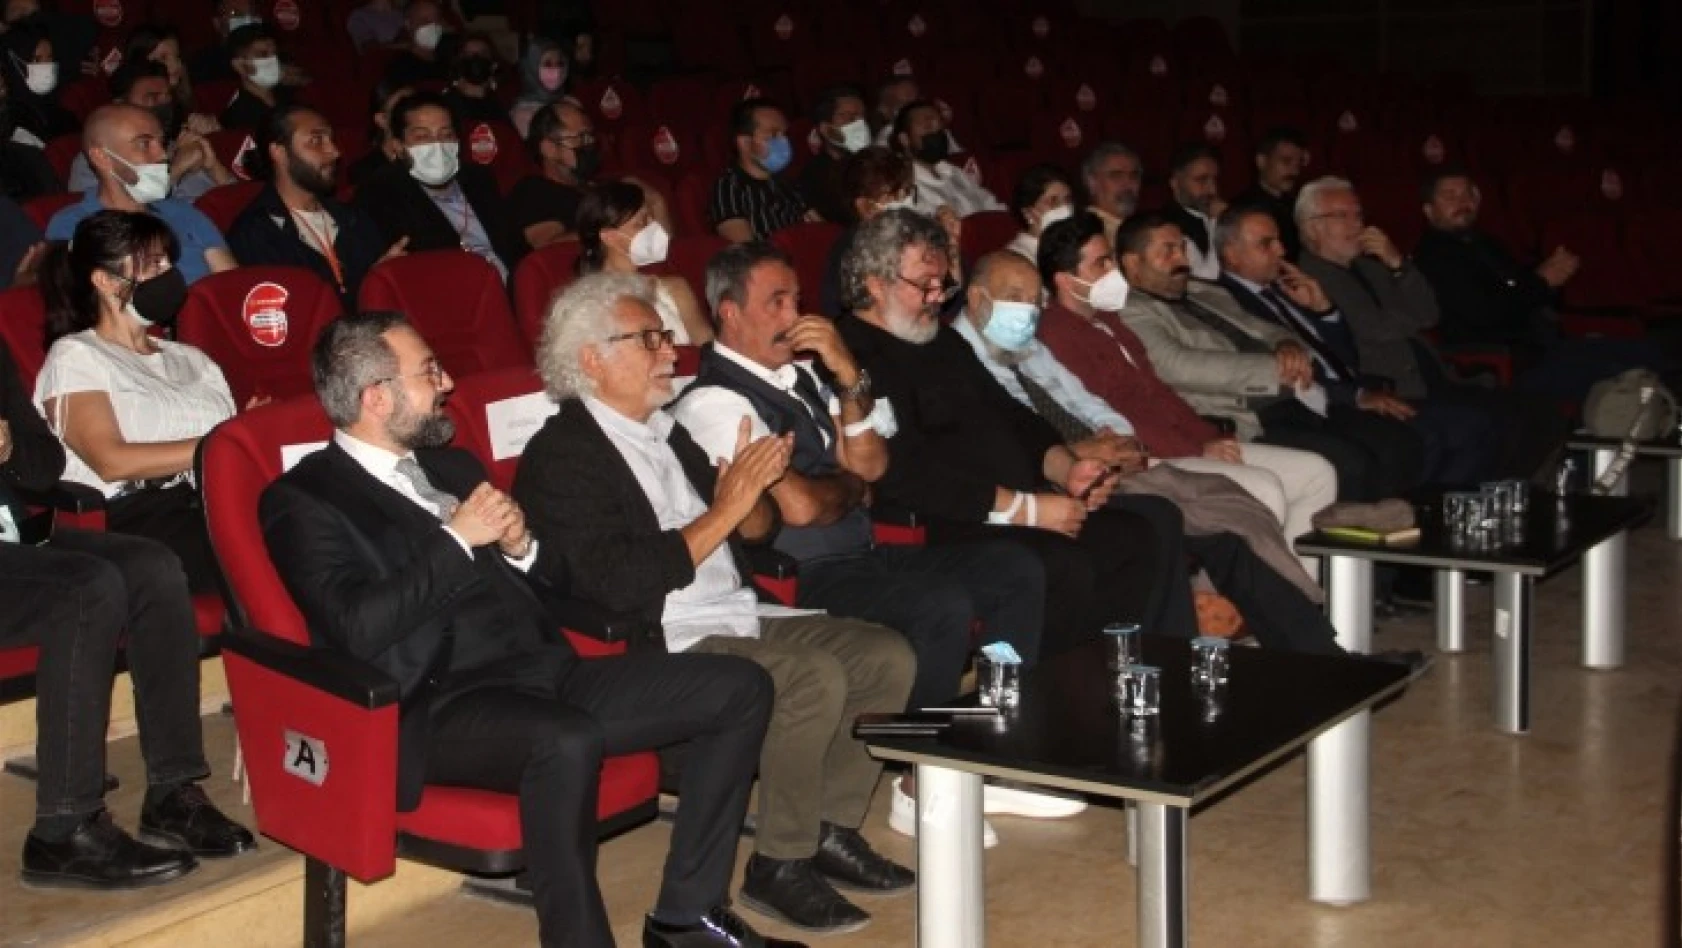 1'inci Harput Kısa Film Festivali sona erdi